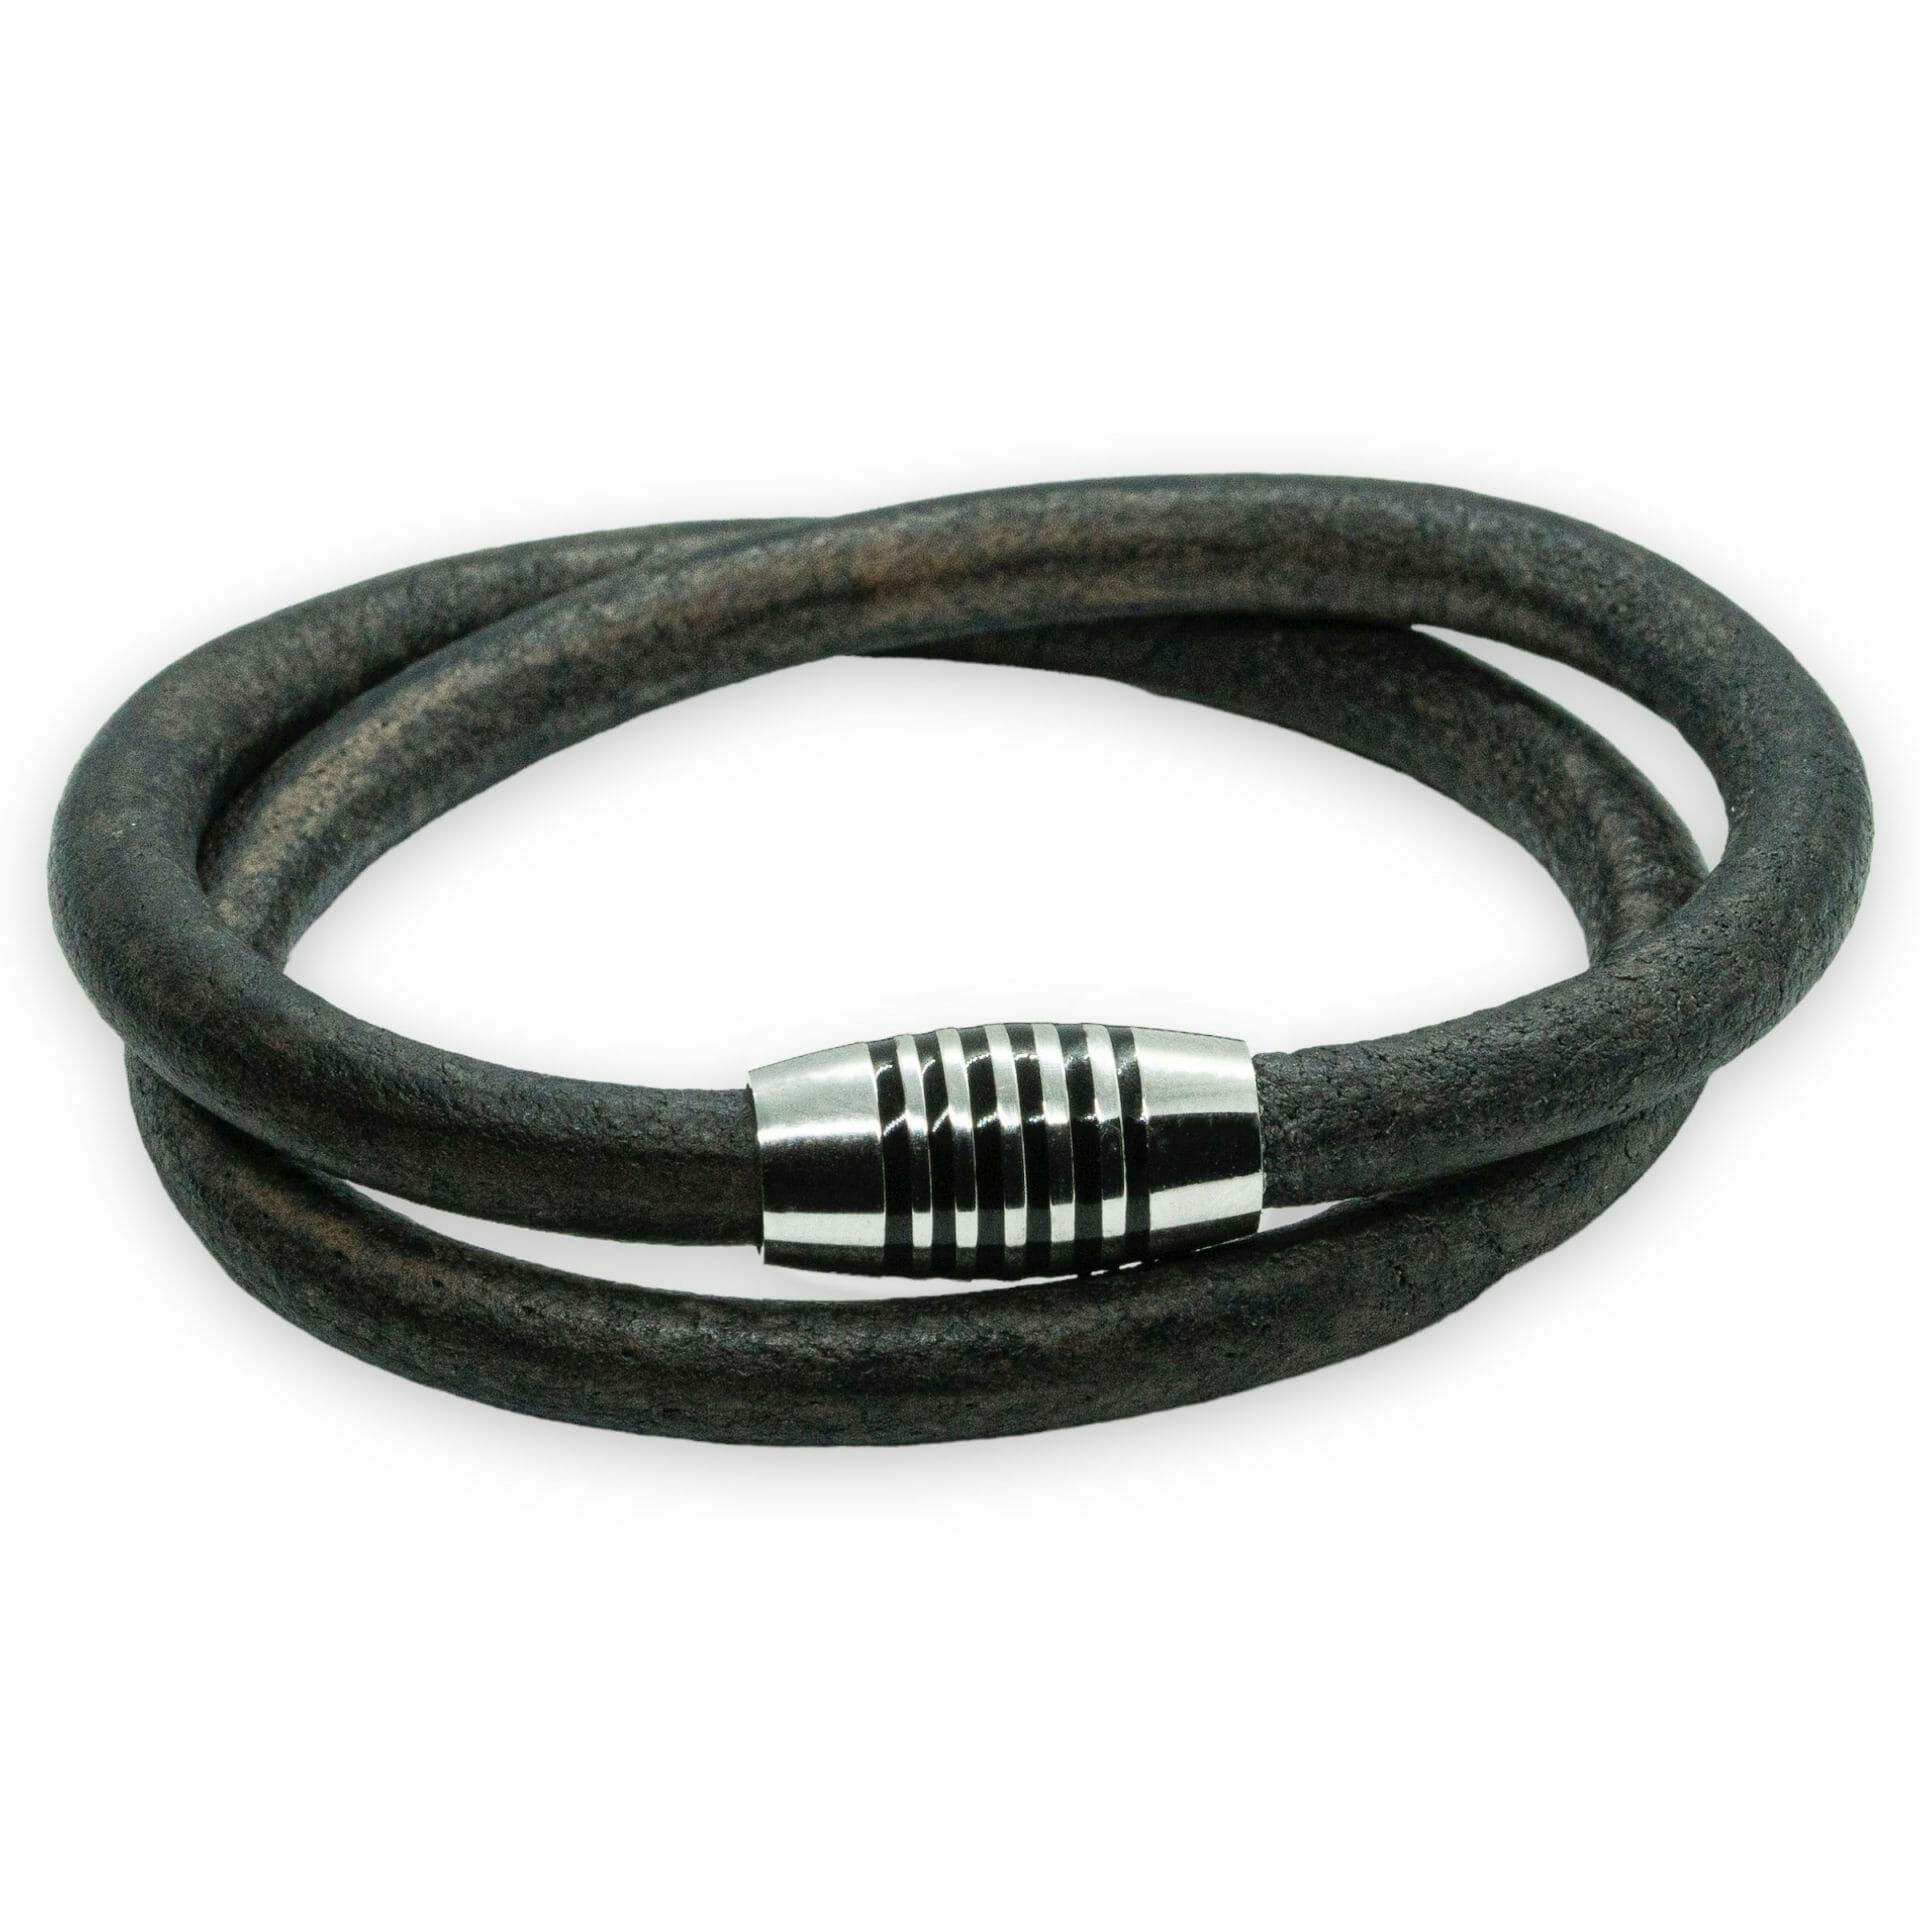 Double round leather black 6mm bracelet